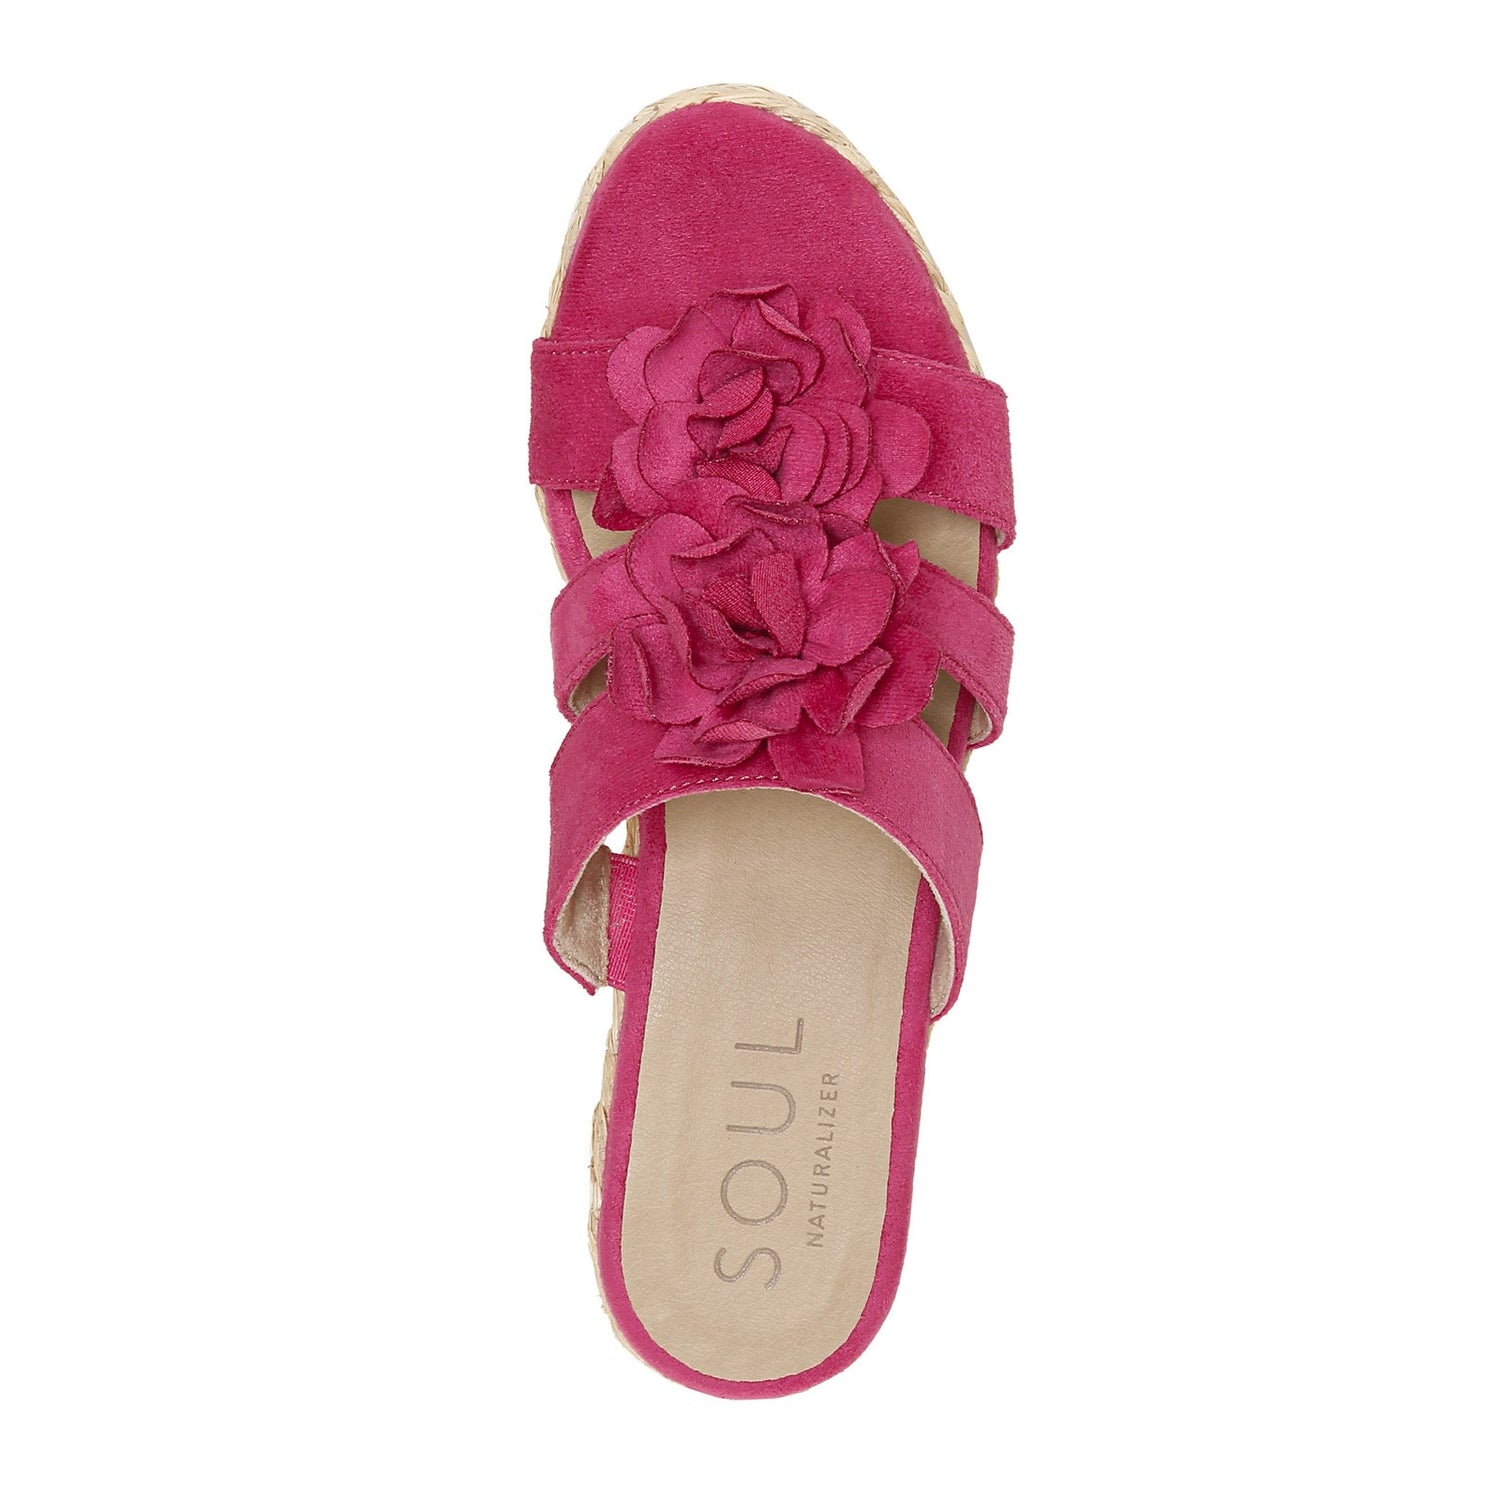 Peltz Shoes  Women's SOUL Naturalizer Oodles Flower Sandal FUSCHIA I0783F0650